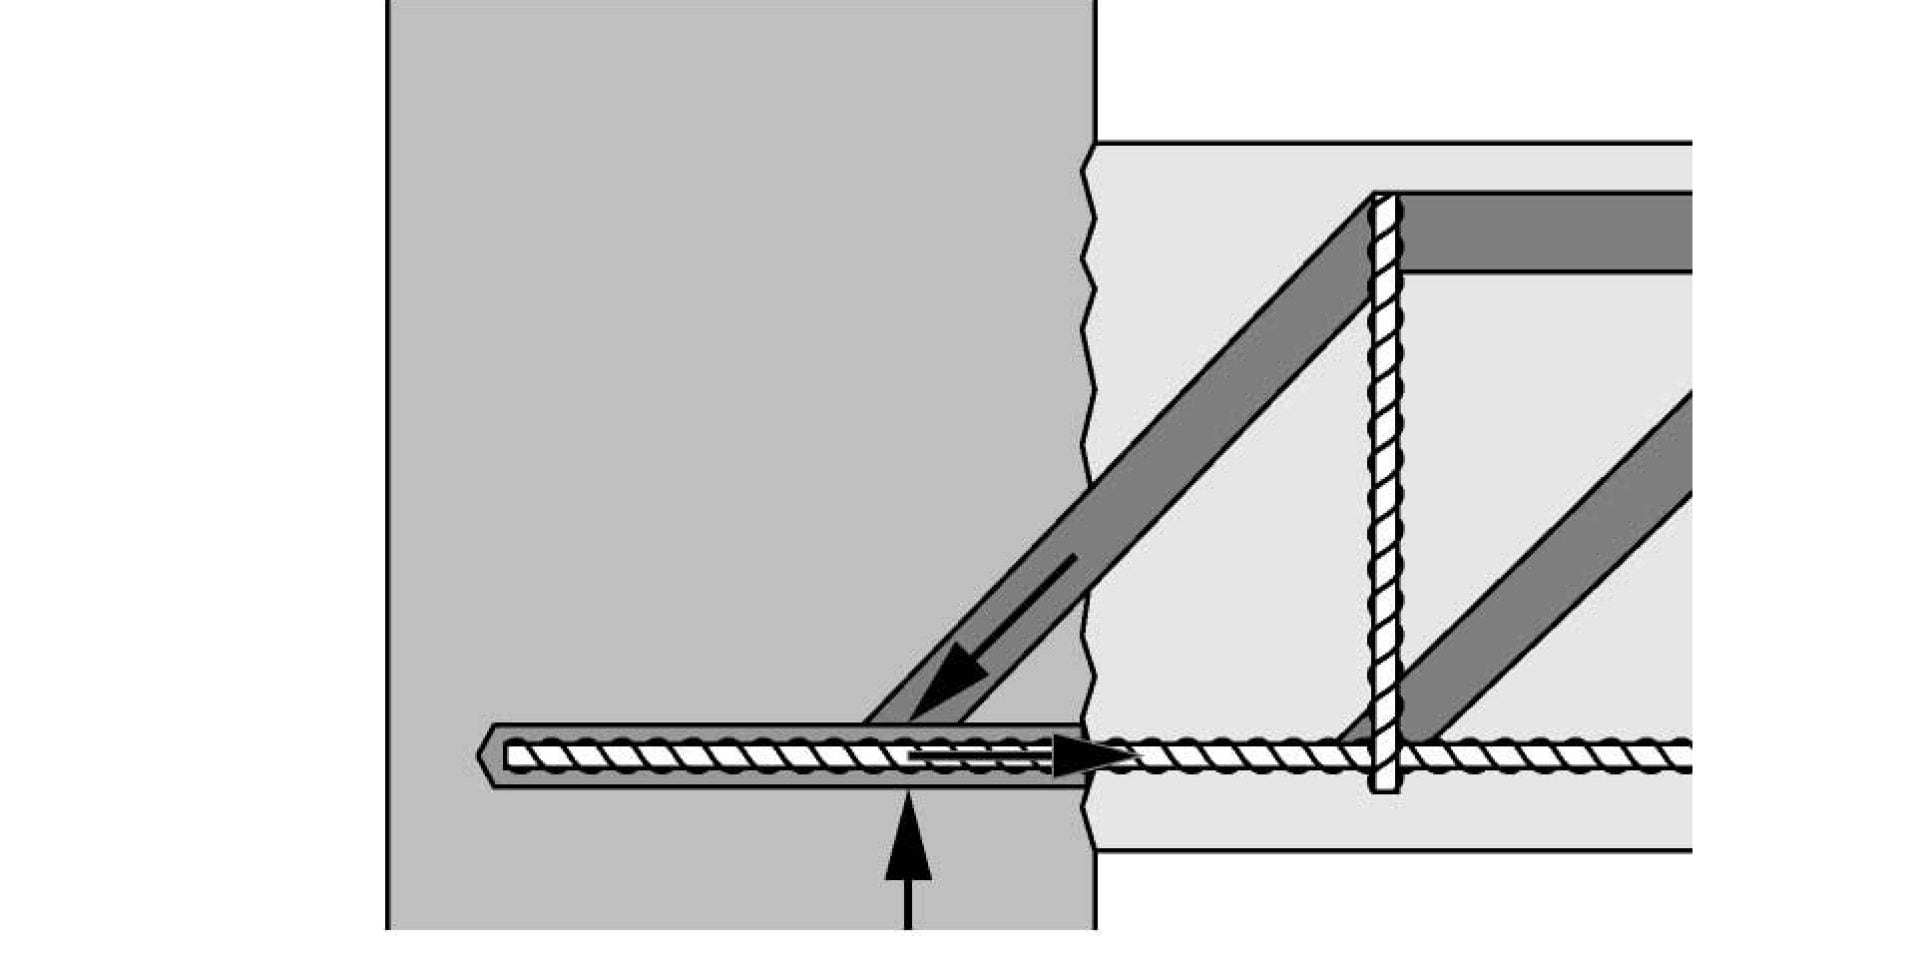 Post installed rebar anchorage length Hilti HIT rebar design method